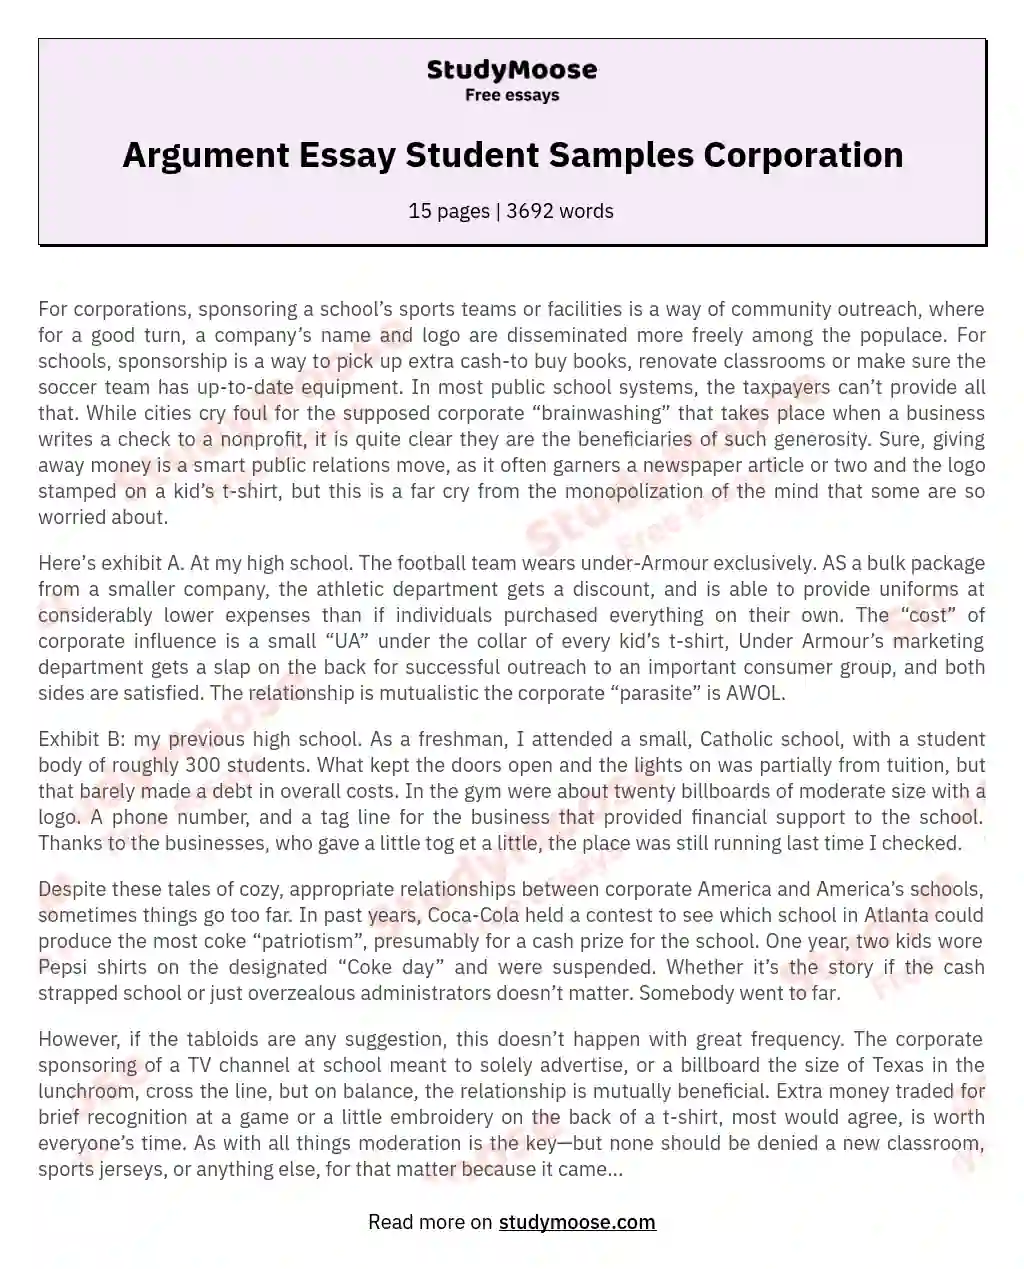 Argument Essay Student Samples Corporation essay